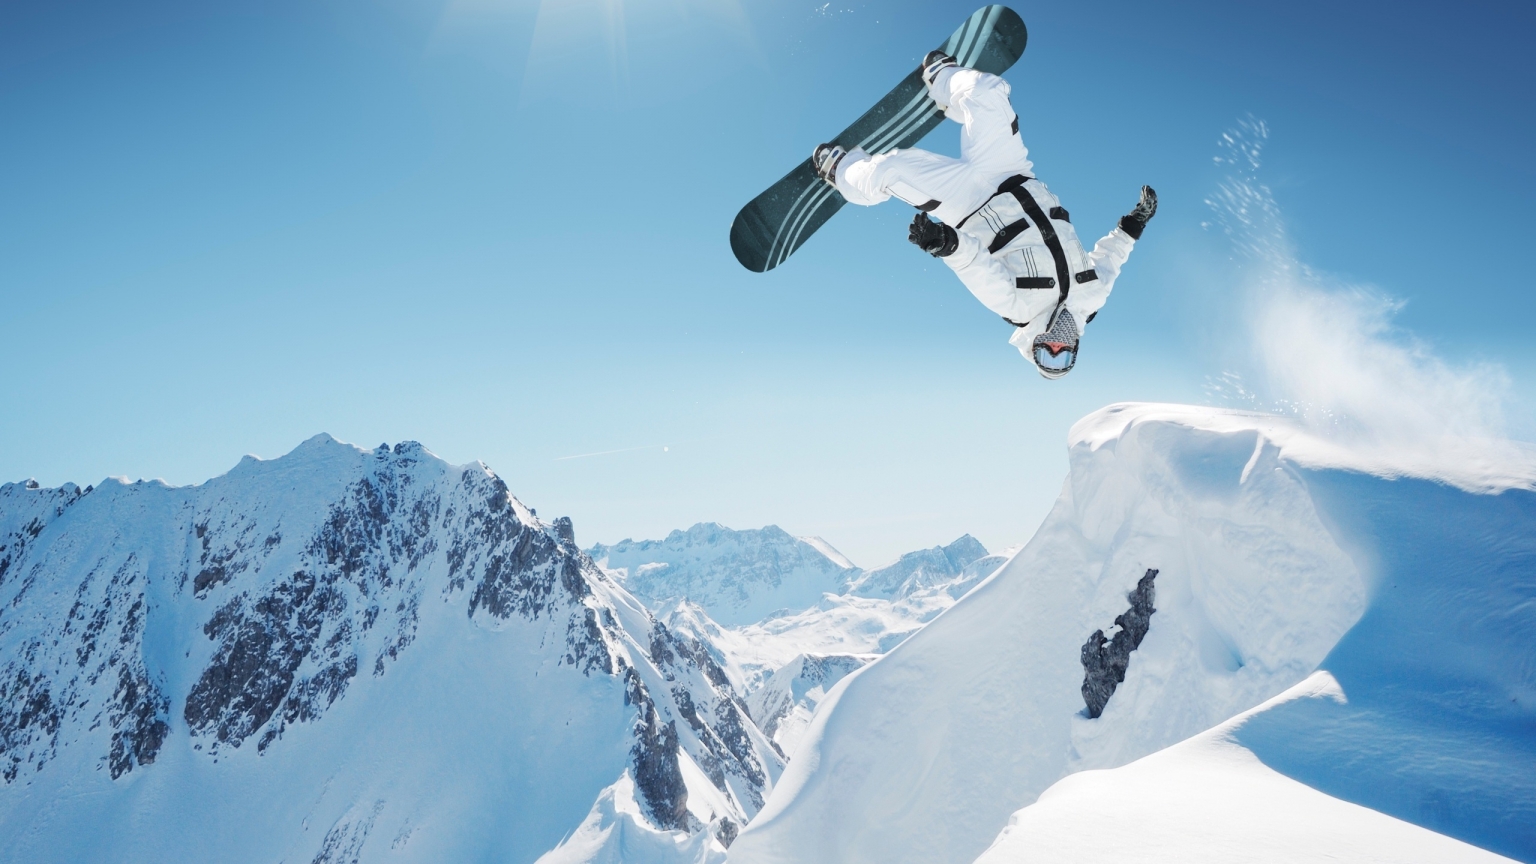 Snowboarding Adventure for 1536 x 864 HDTV resolution